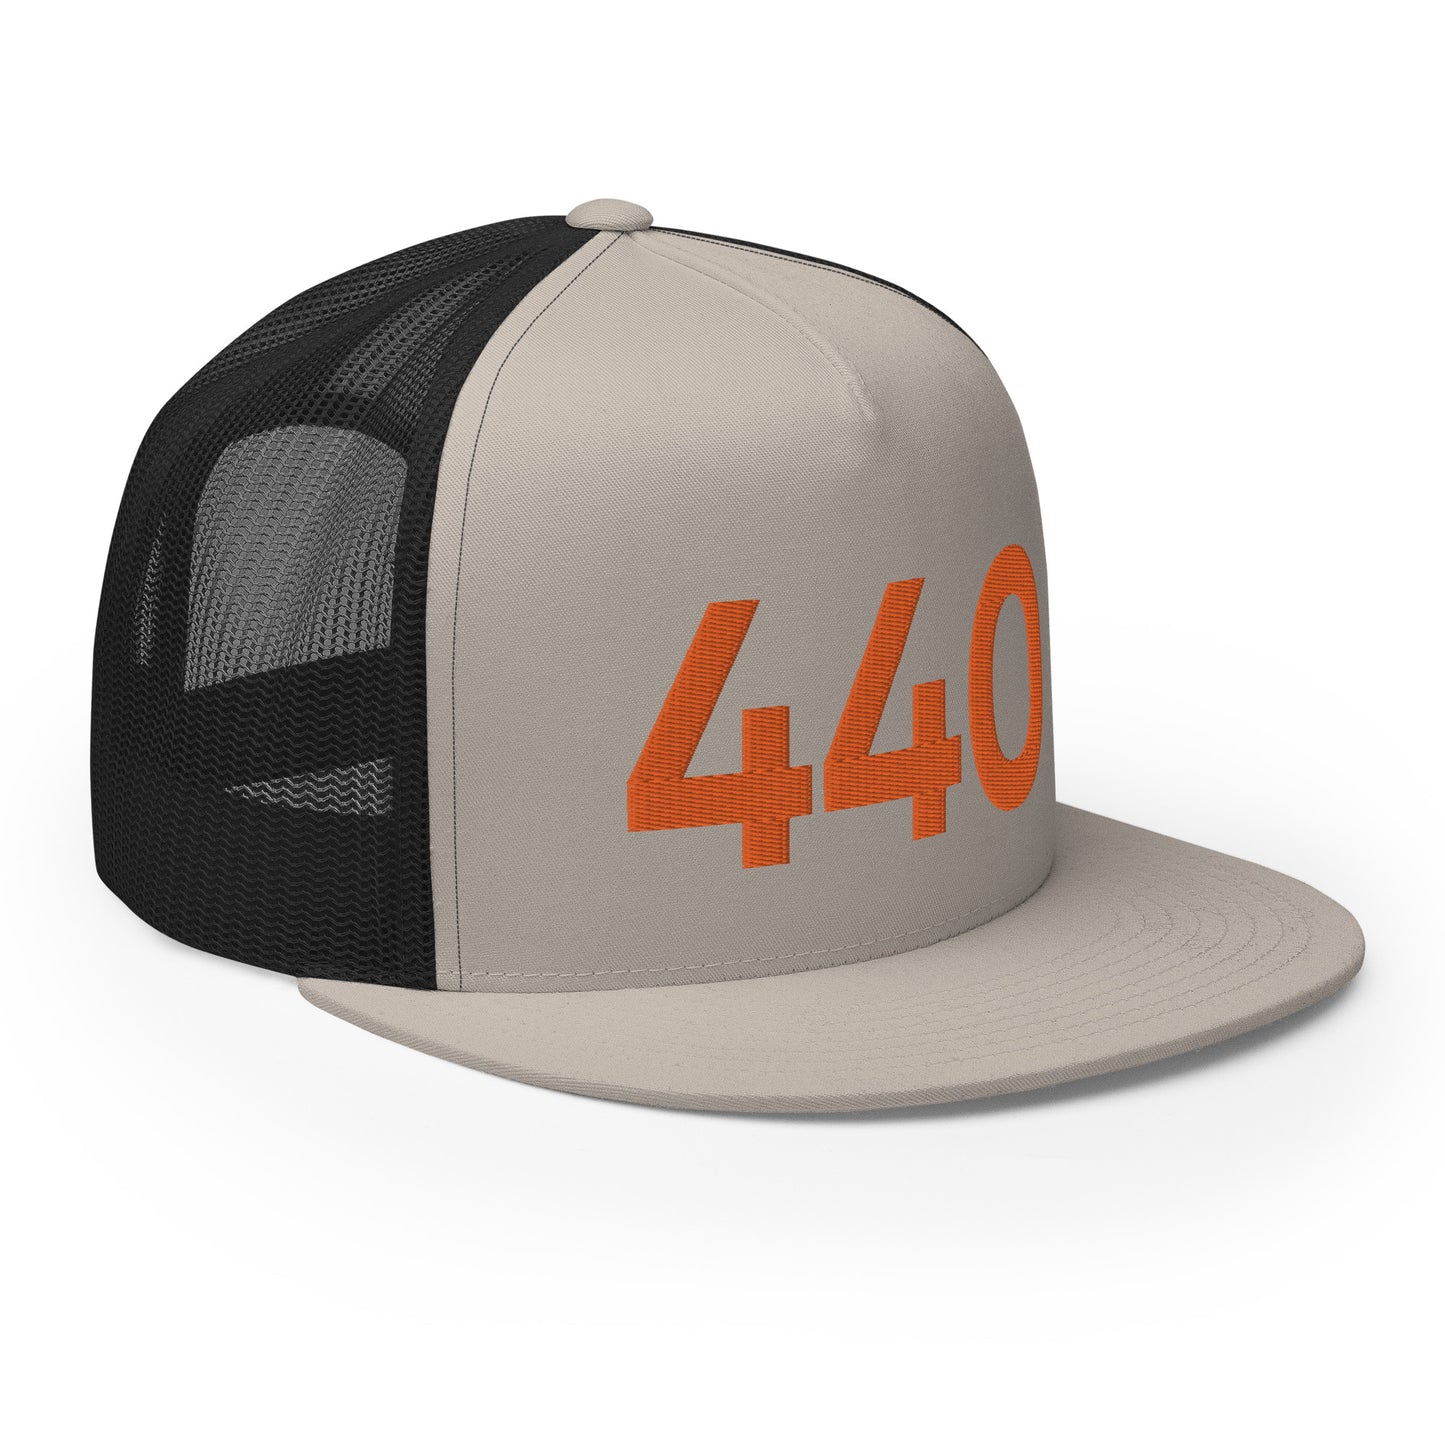 440 Cleveland Proud Trucker Hat